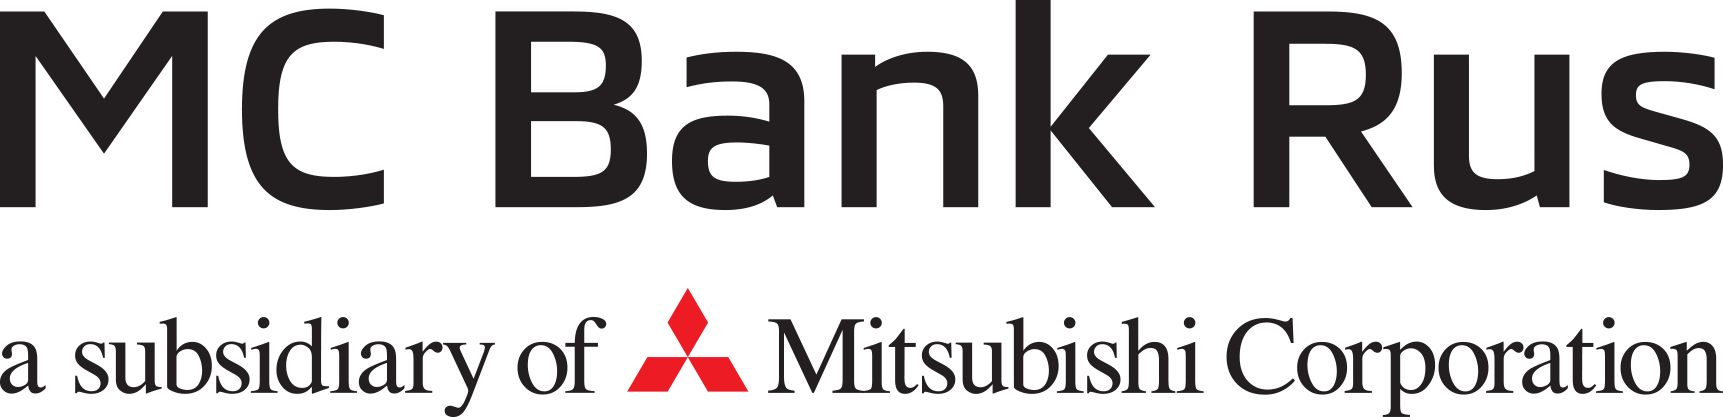 М c ru. МС банк рус. Mitsubishi банк. Rus логотип. Эмблема банковского дела.